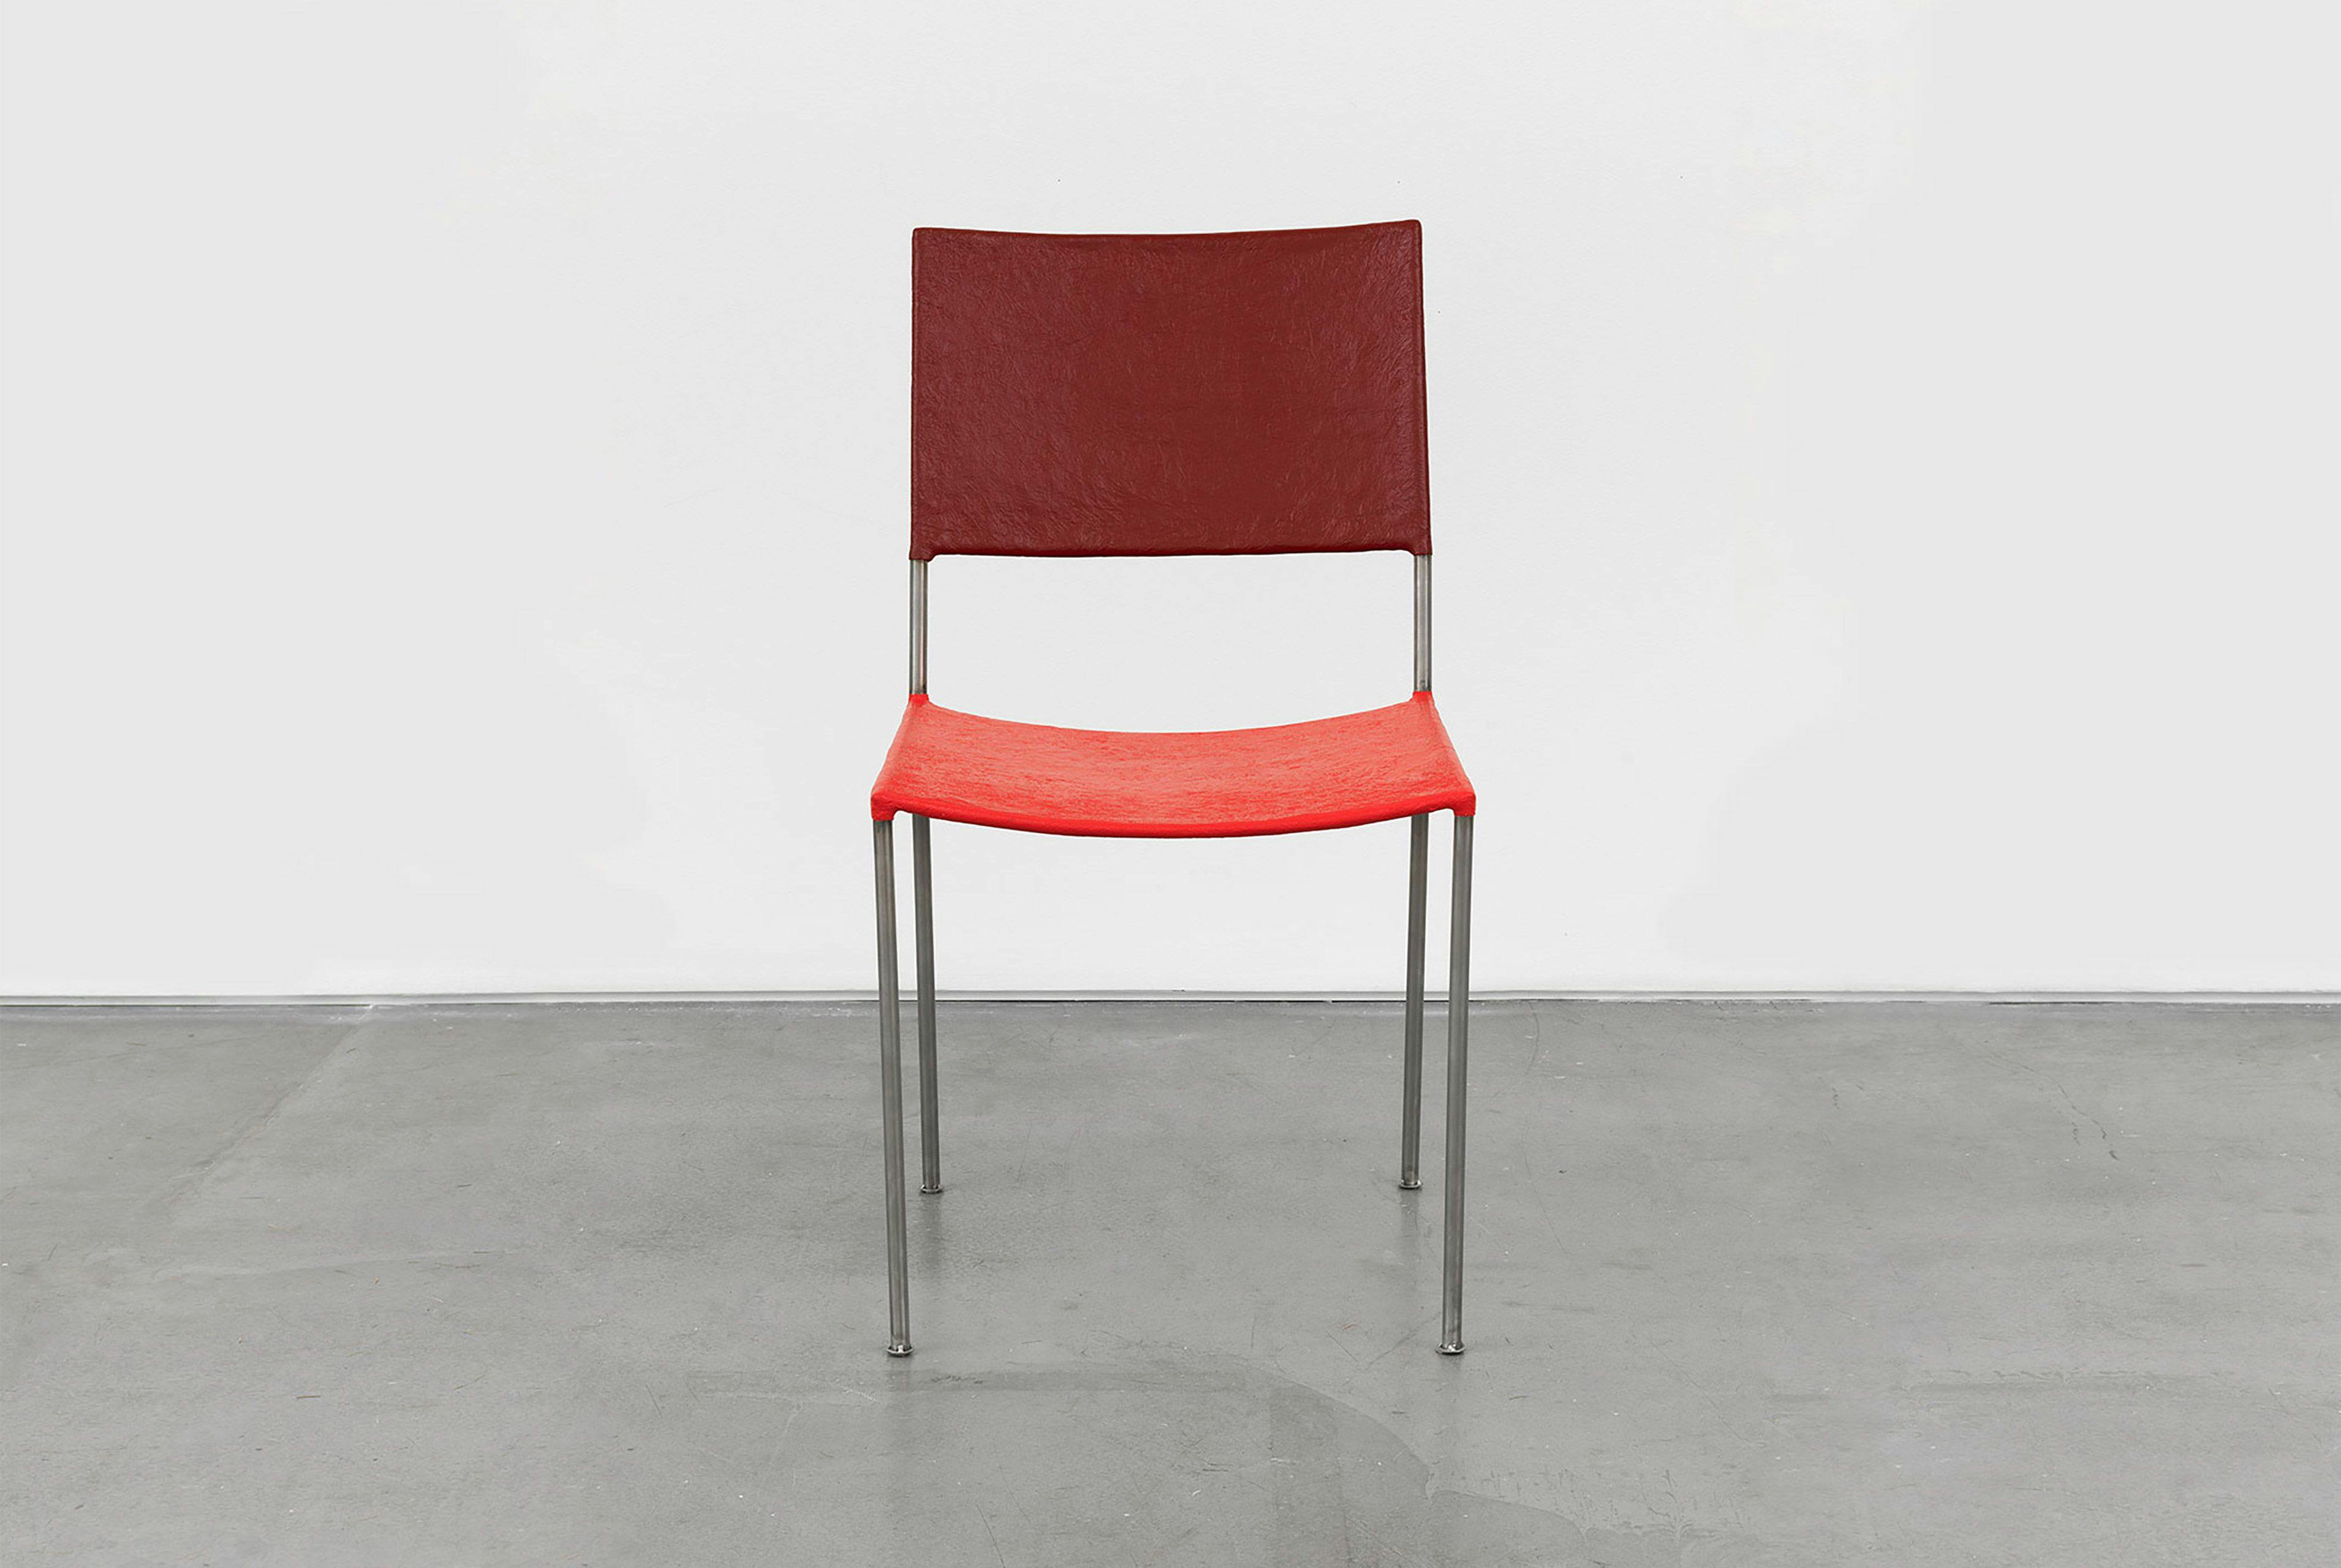 A furniture work by Franz West, titled Künstlerstuhl (Artist's Chair), dated 2006/2015	